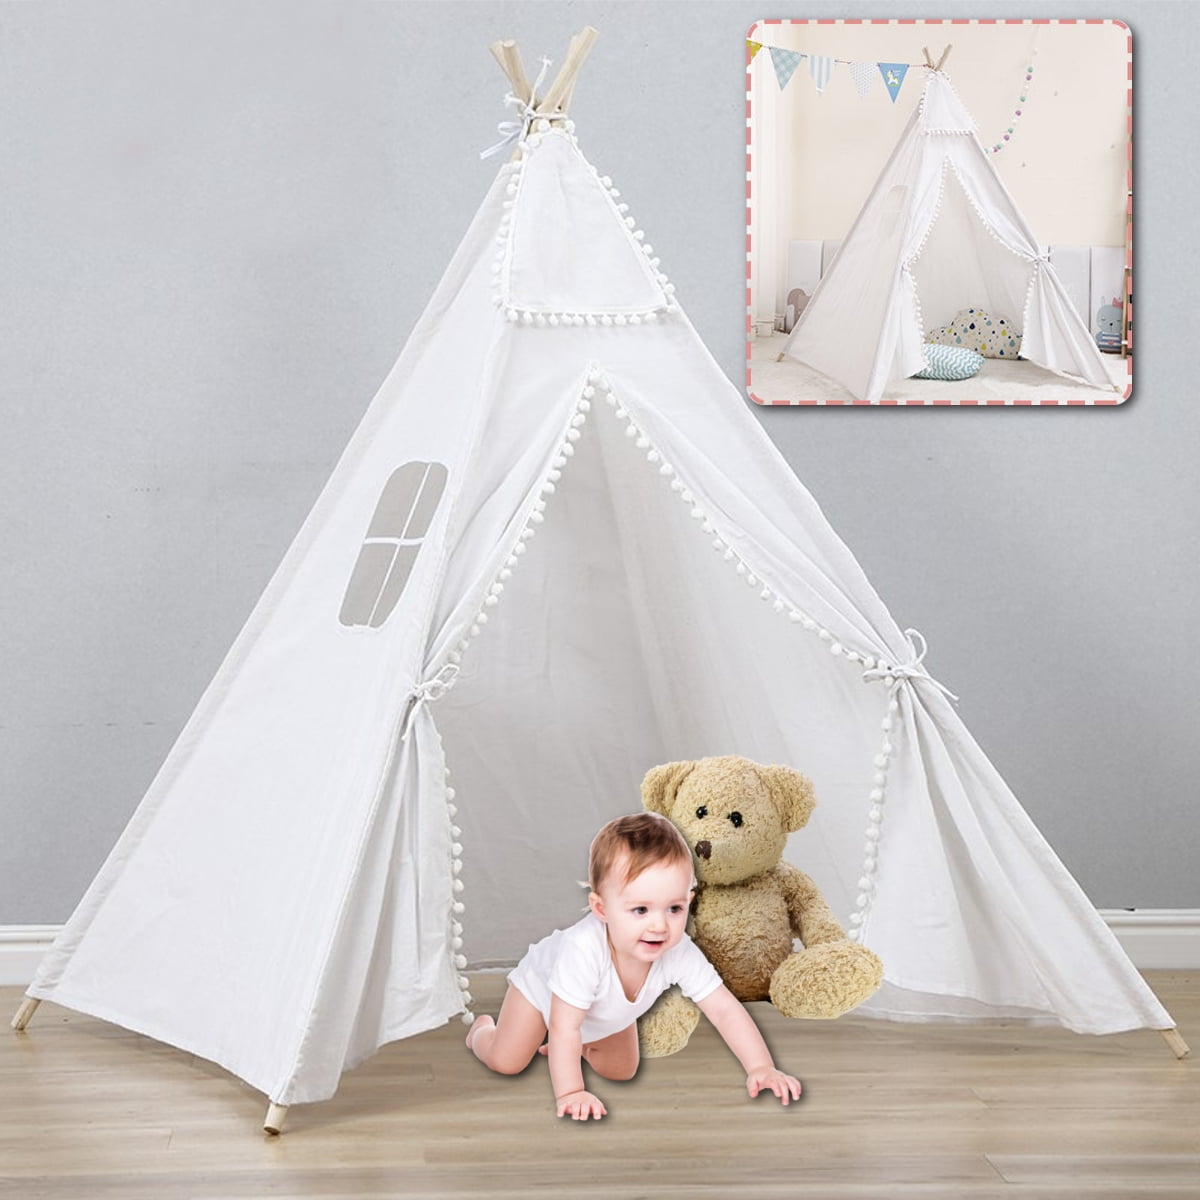 Details about   Kids Playhouse Play Tent Castle Princess Foldable Tepee Strip LED Lights Gift AU 